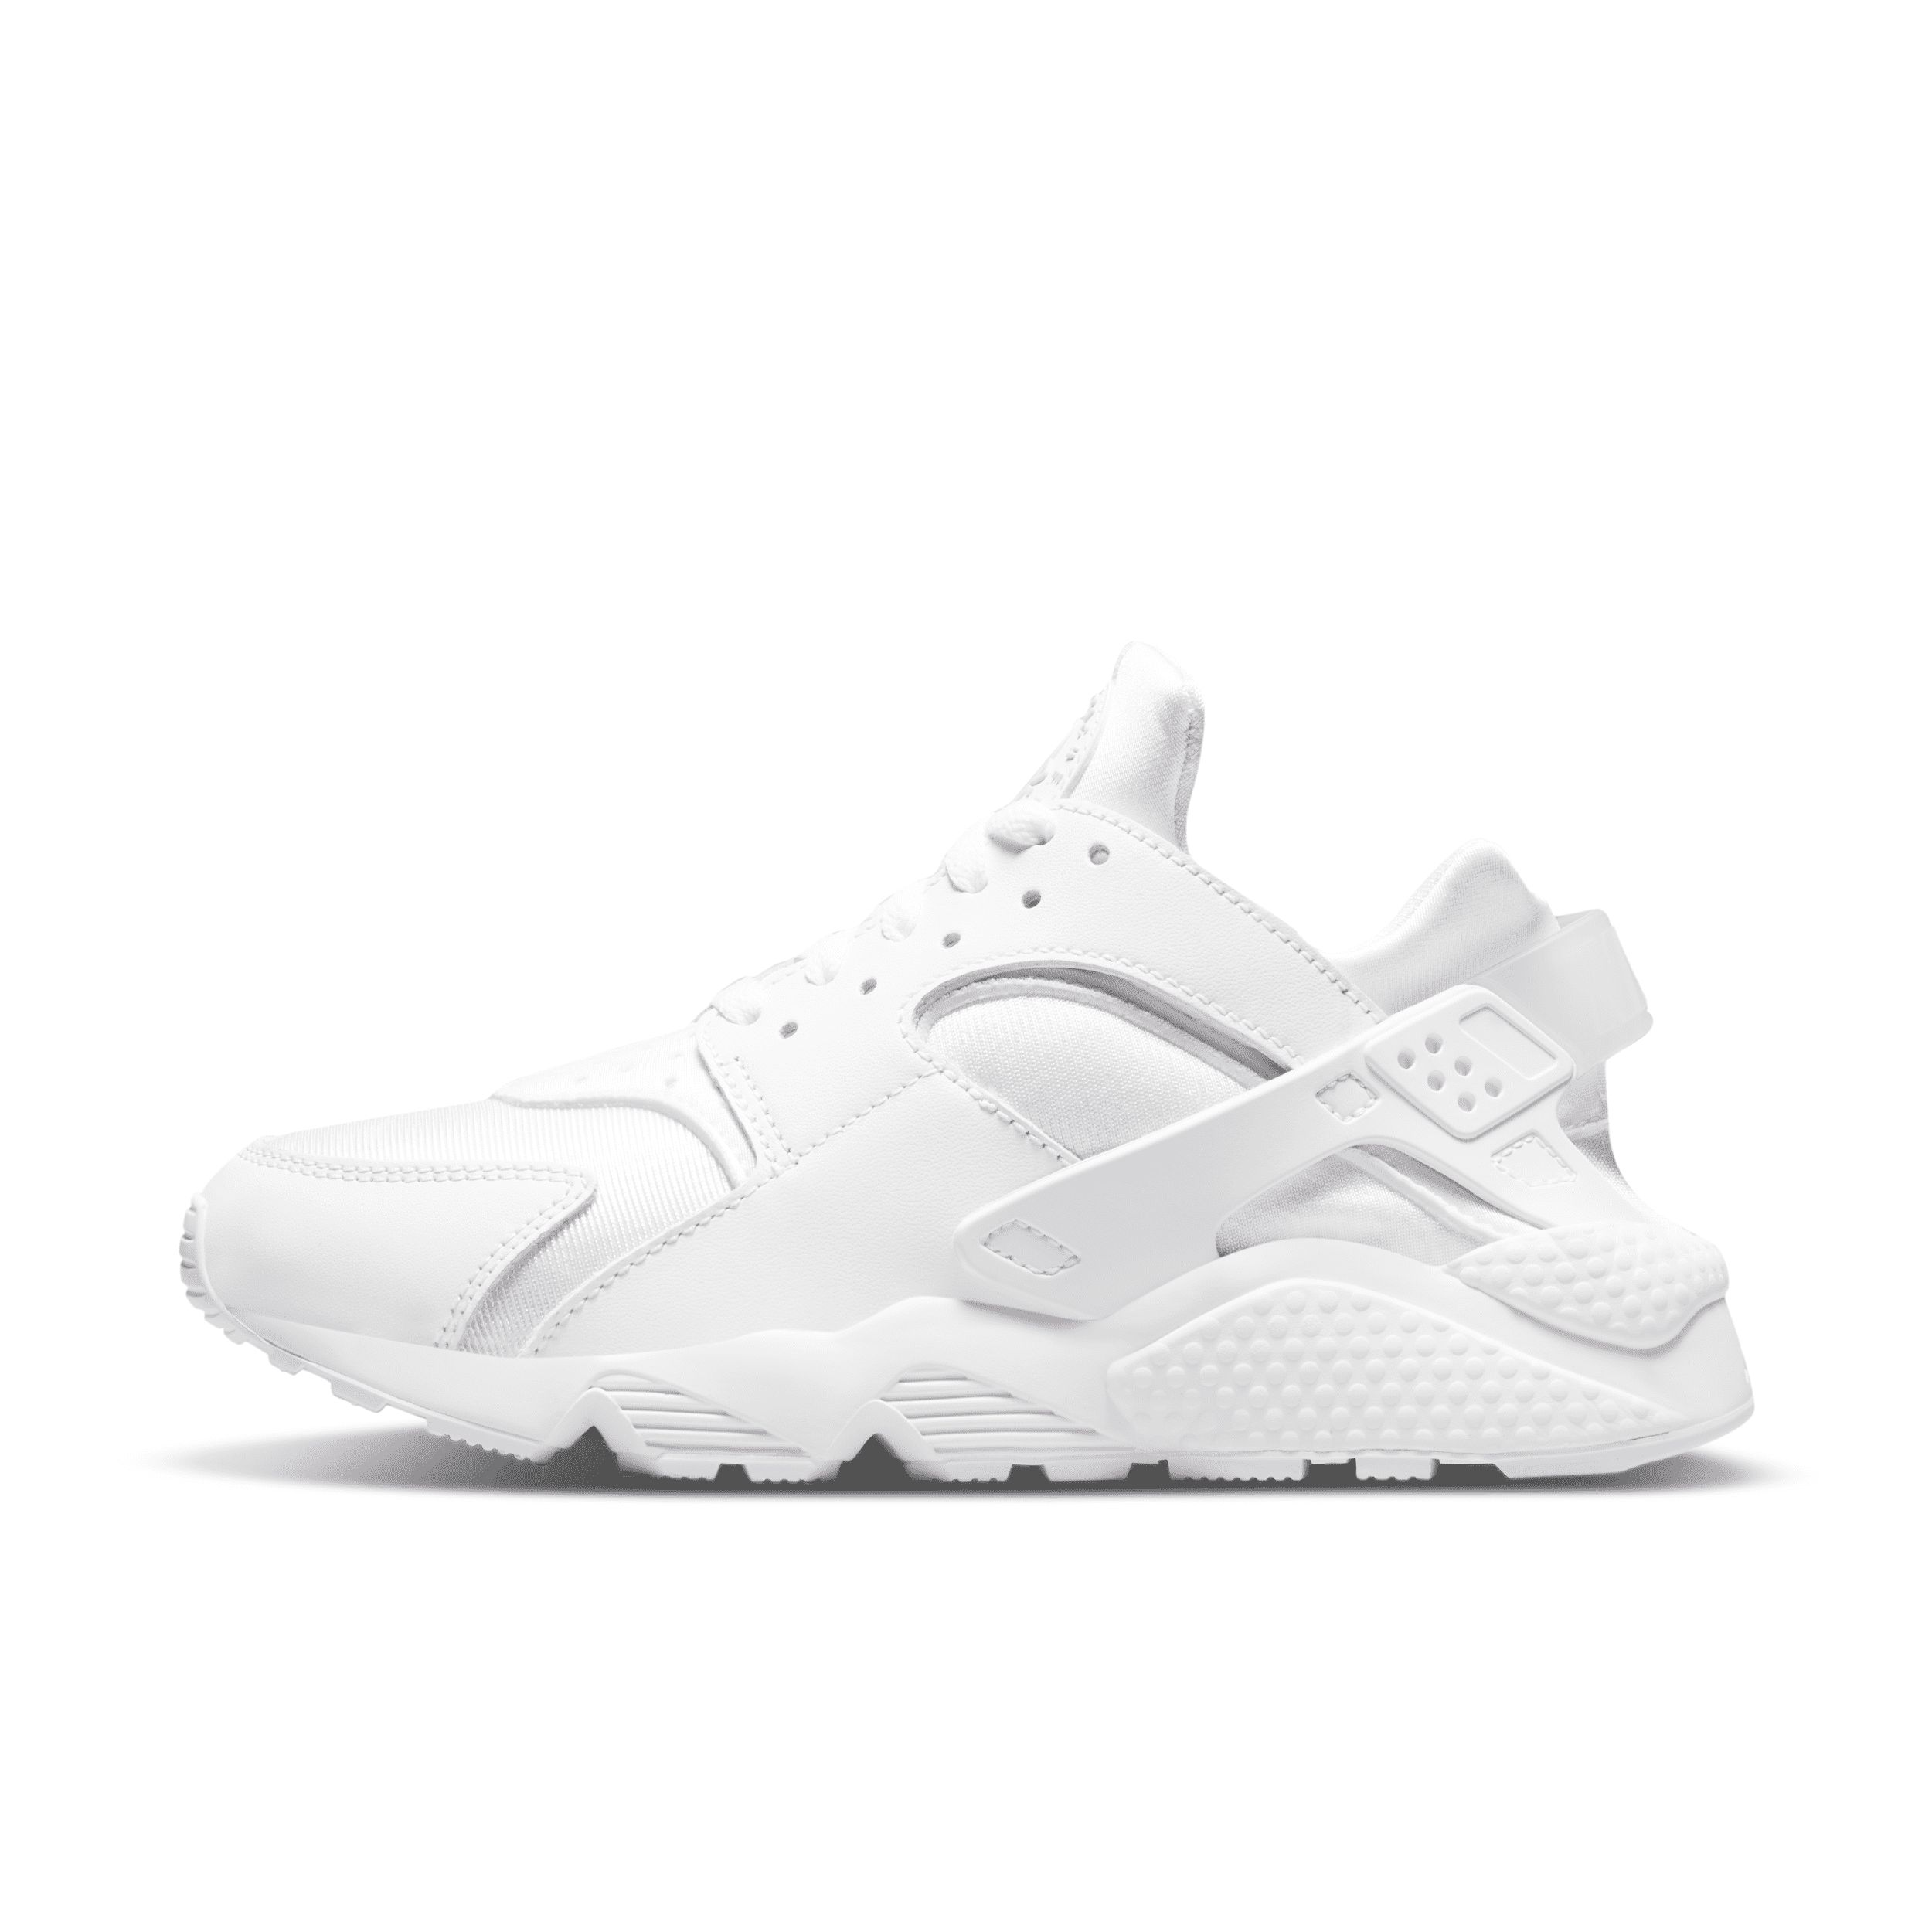 Nike Women's Air Huarache Shoes in White, Size: 8.5 | DH4439-102 | Nike (US)